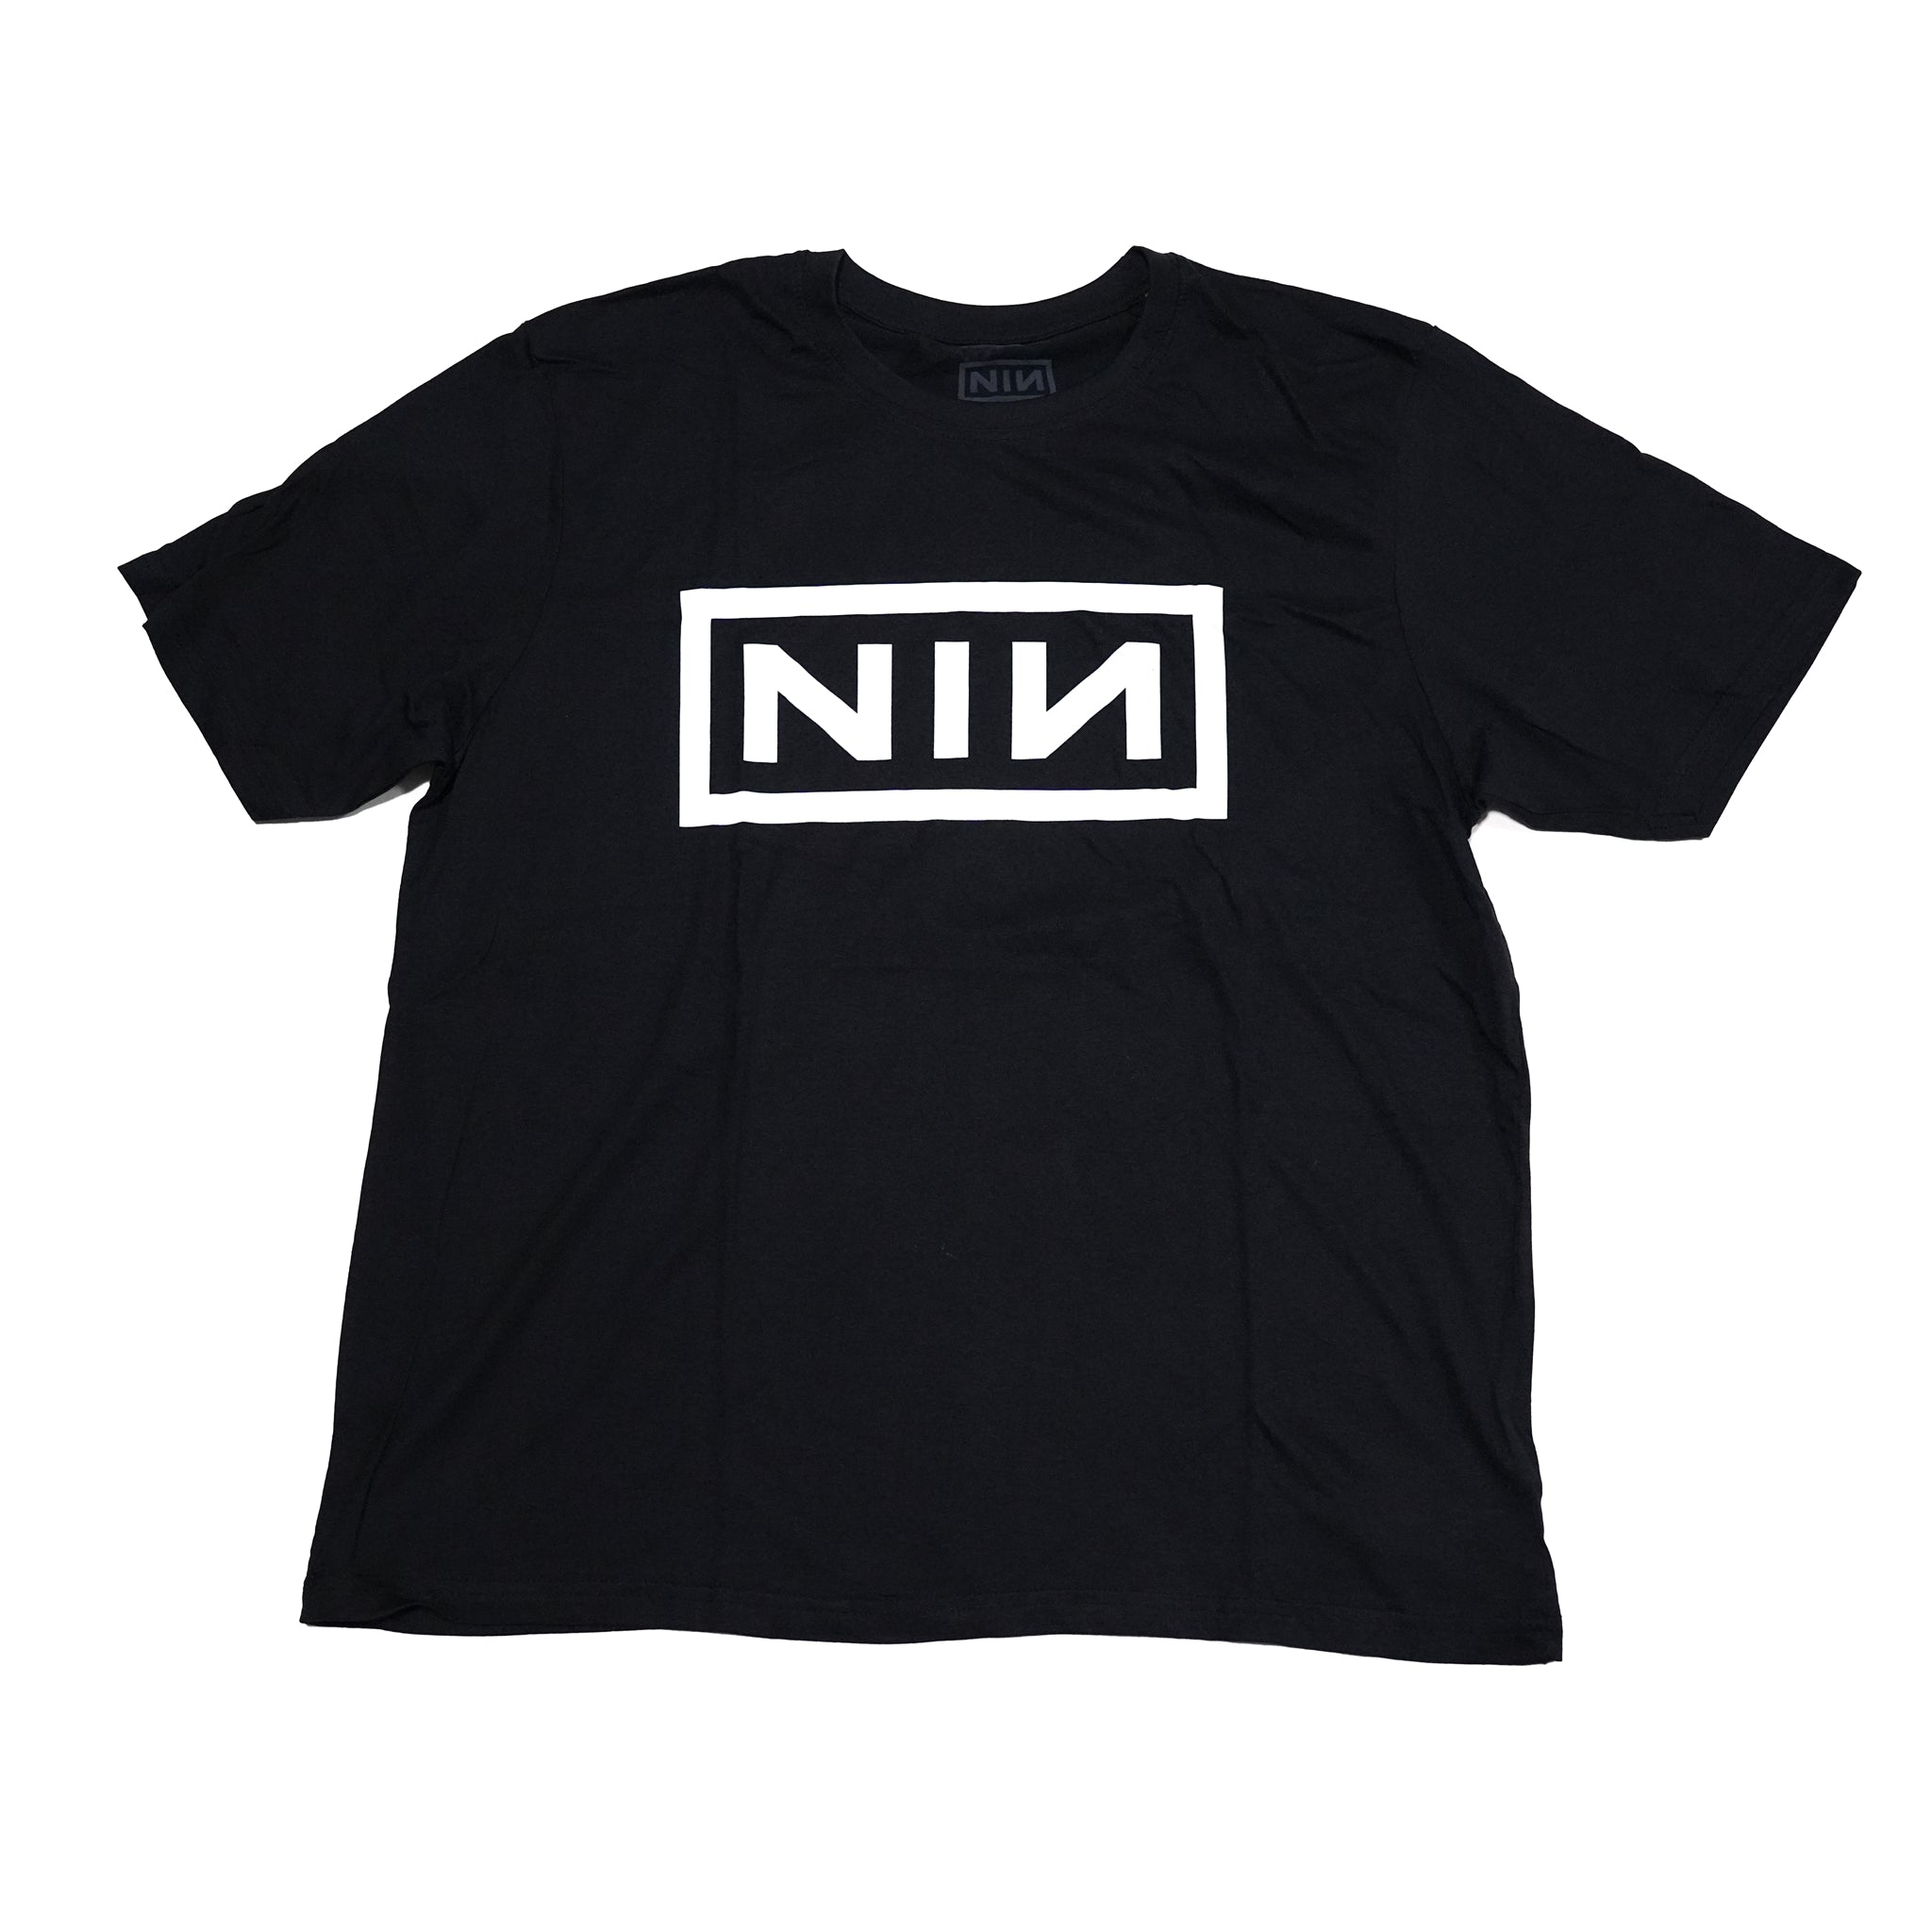 Name:NineInchNails_Classic Logo_Unisex_Black【ROCK OFF】【ネコポス選択可能】